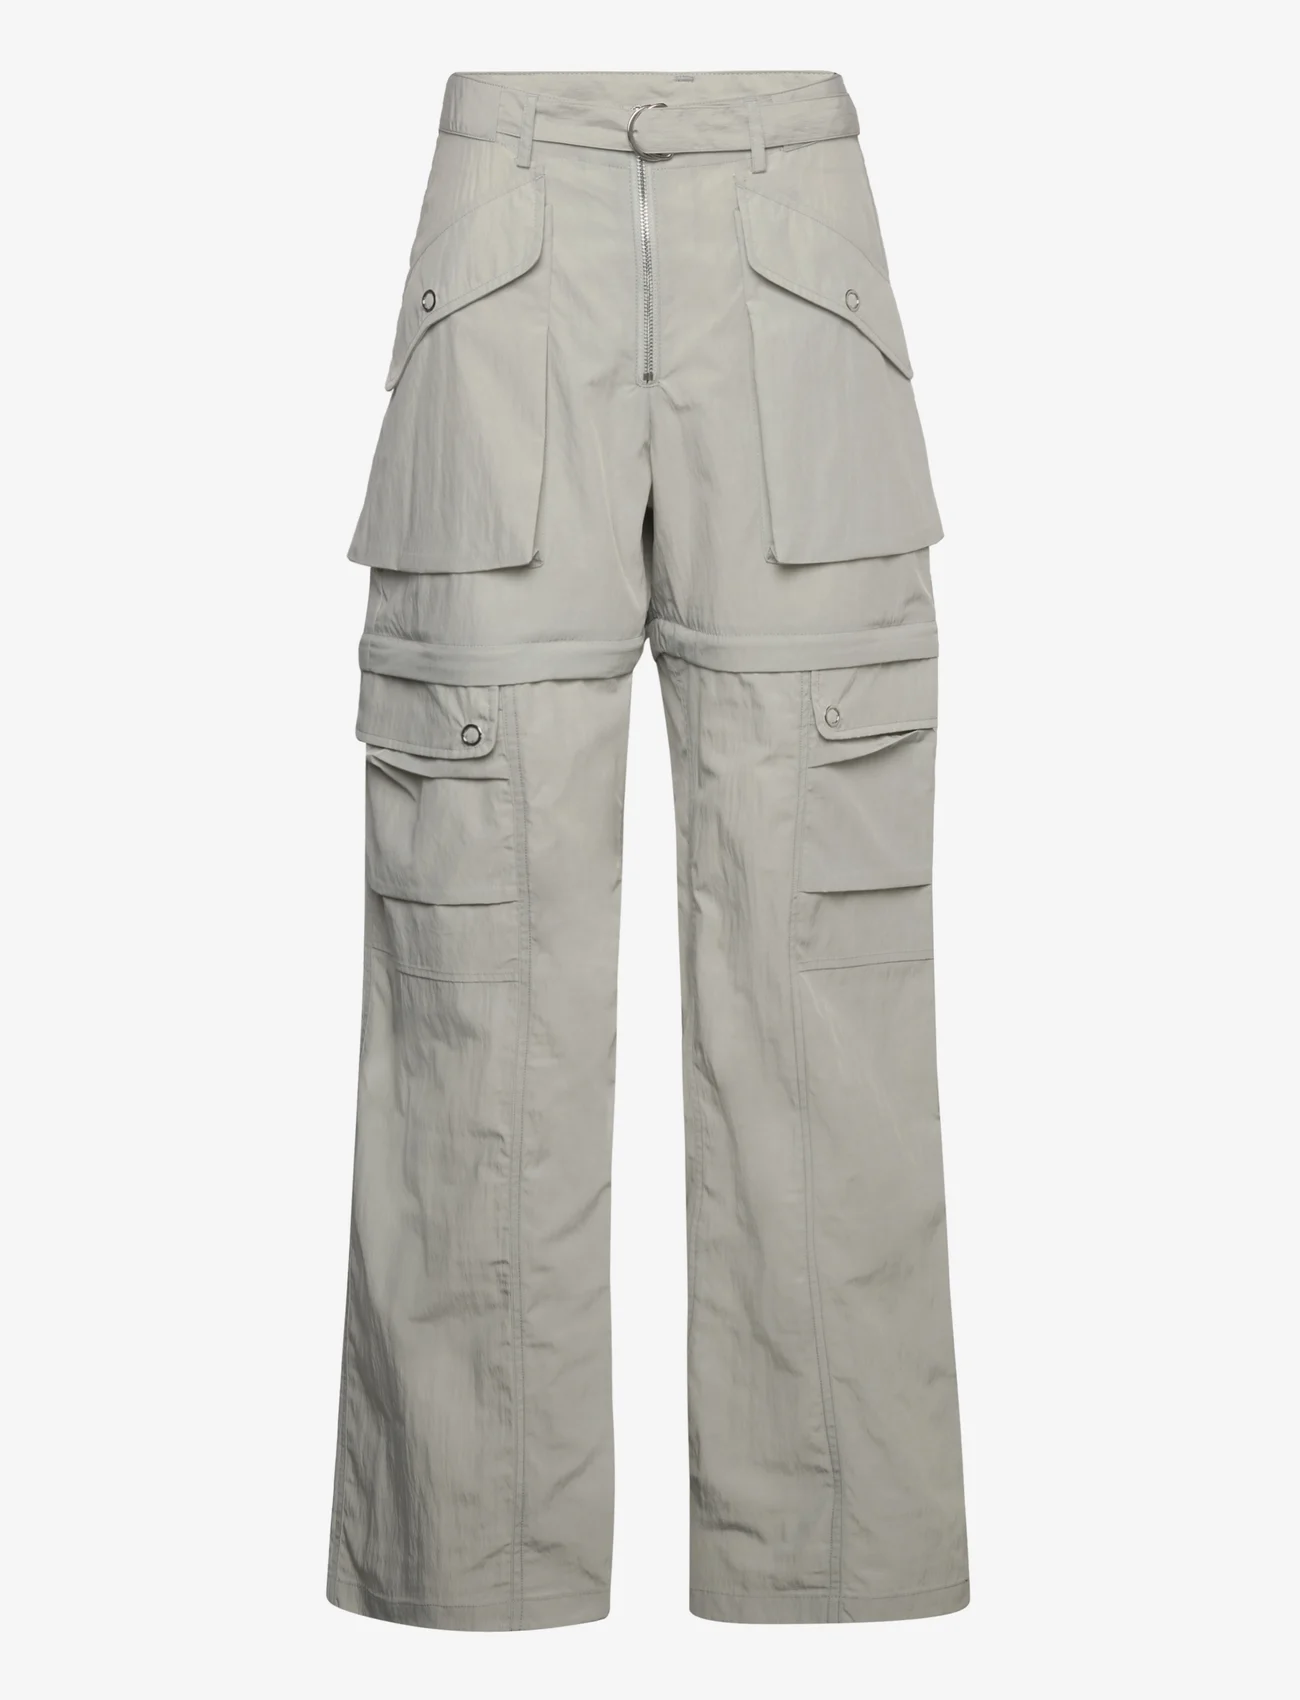 HOLZWEILER - Anatol Trousers - cargo pants - lt. grey - 0